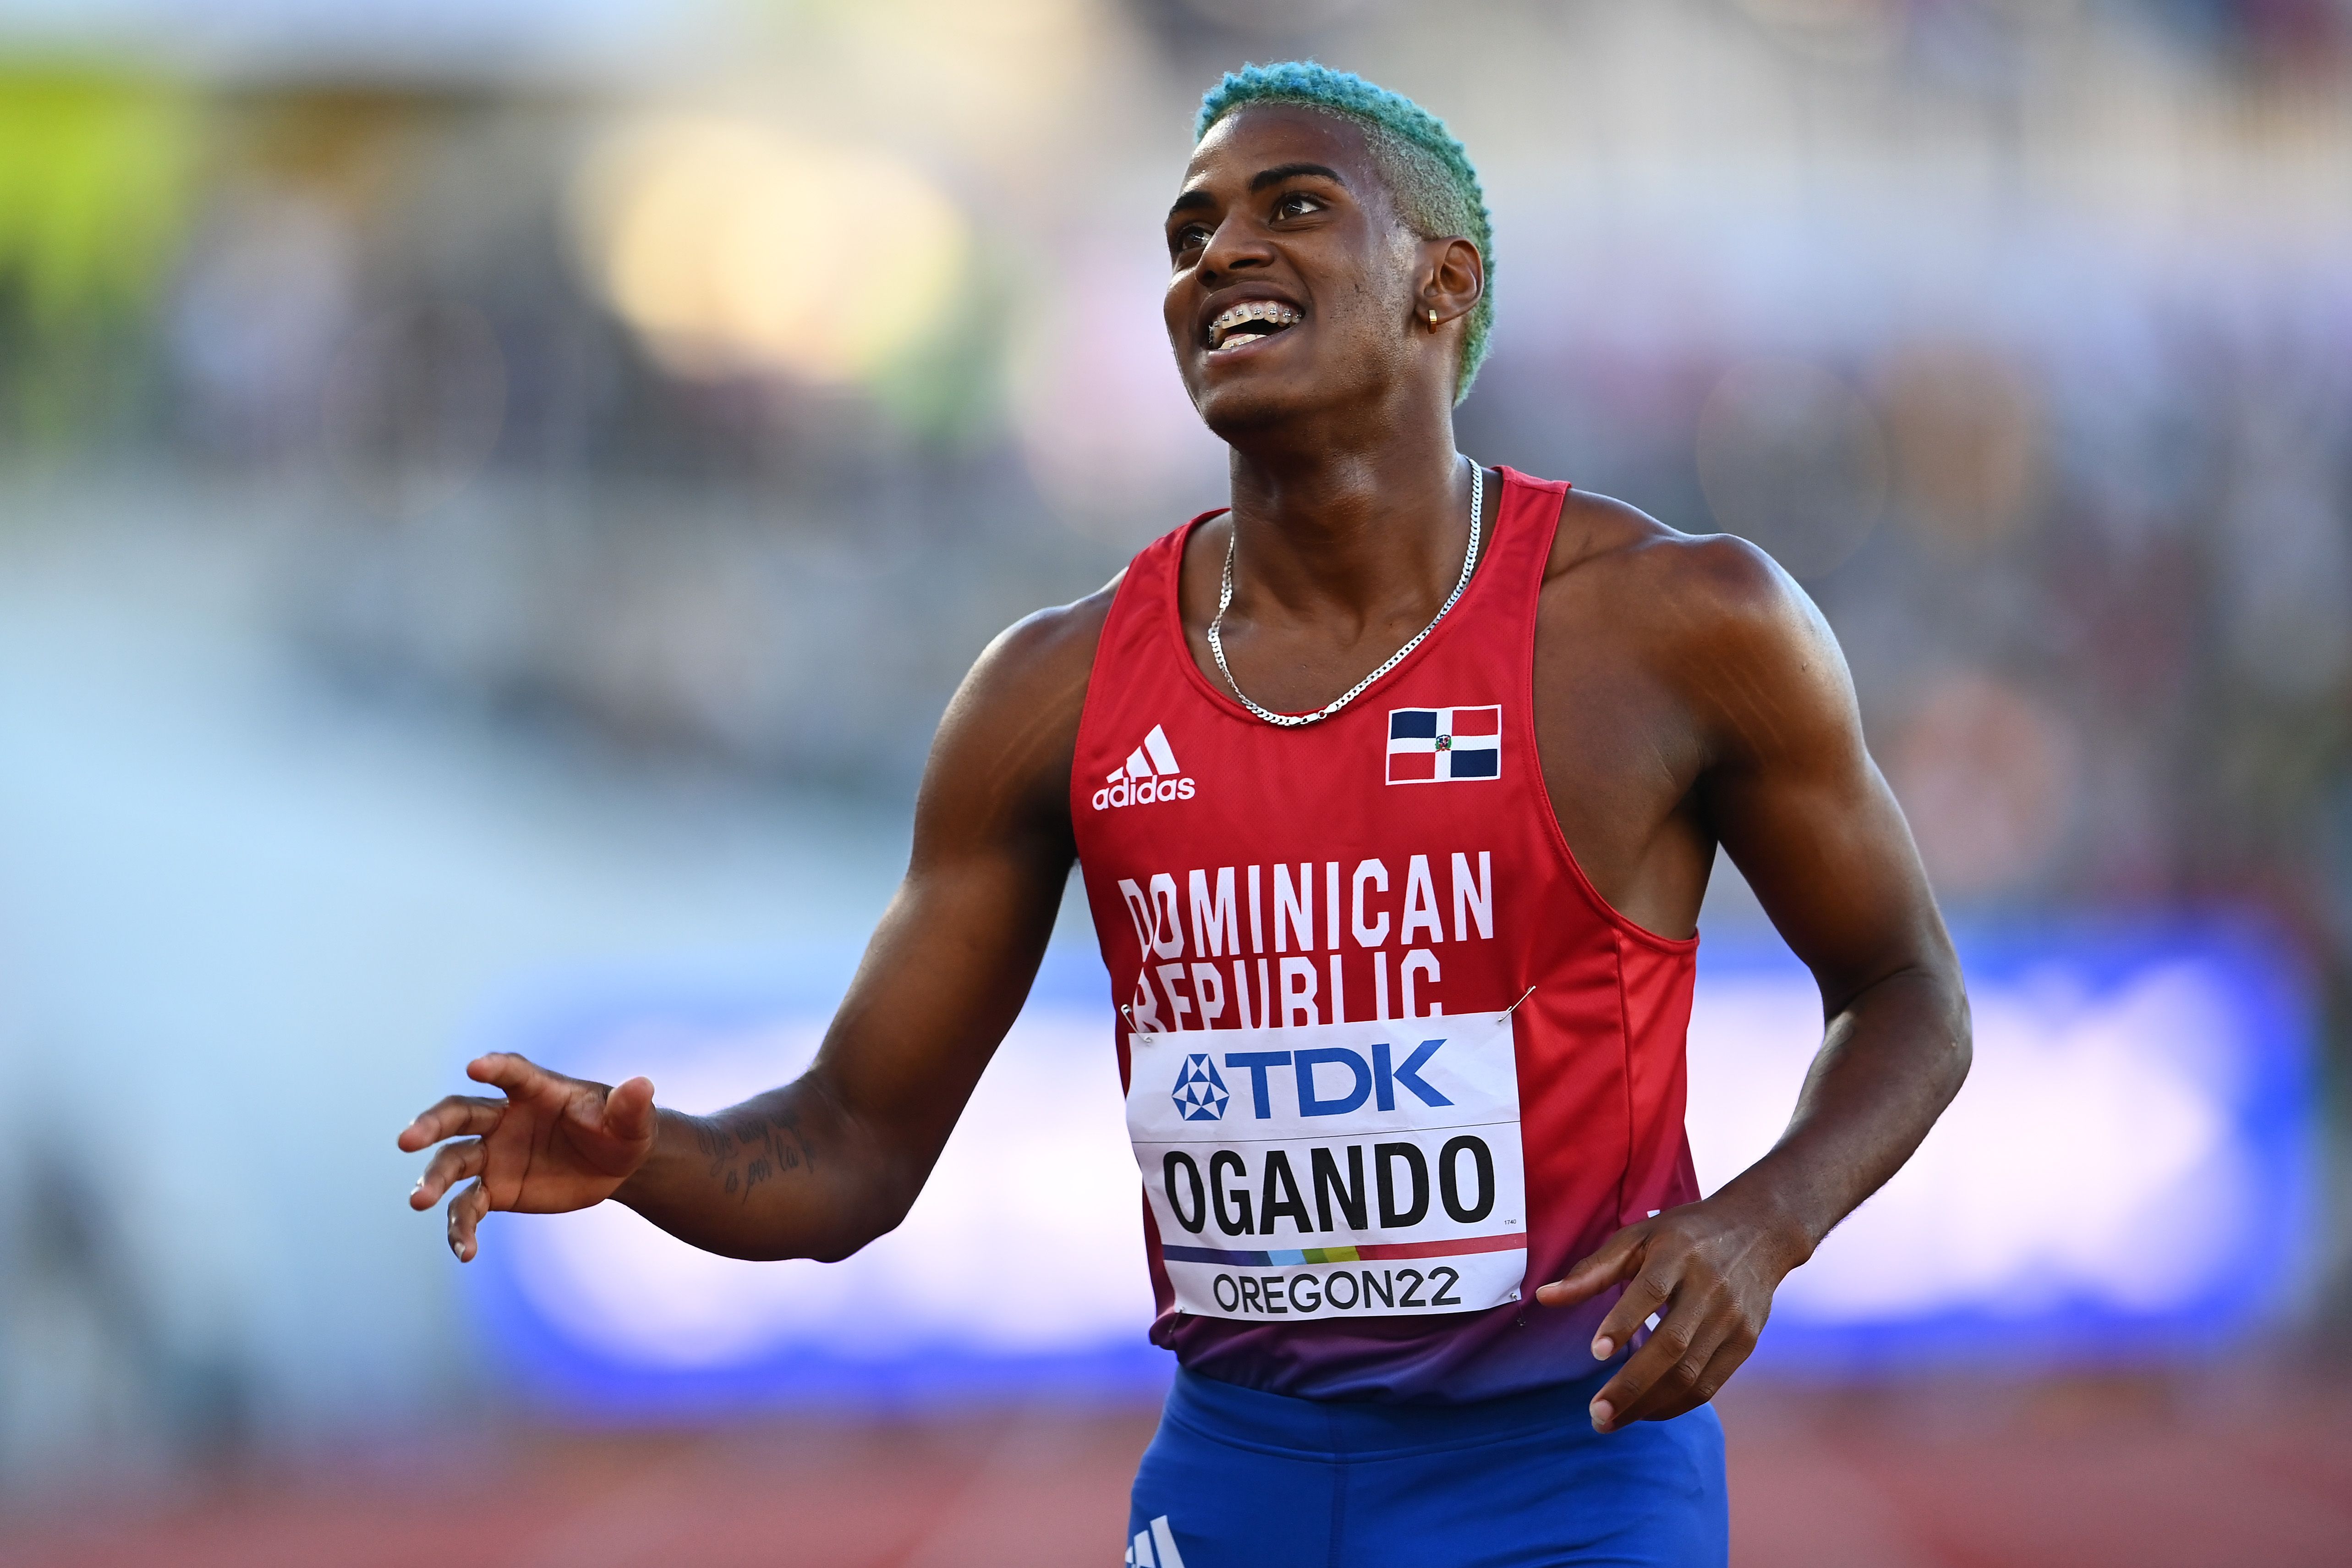 Alexander Ogando in action at the World Athletics Championships Oregon22